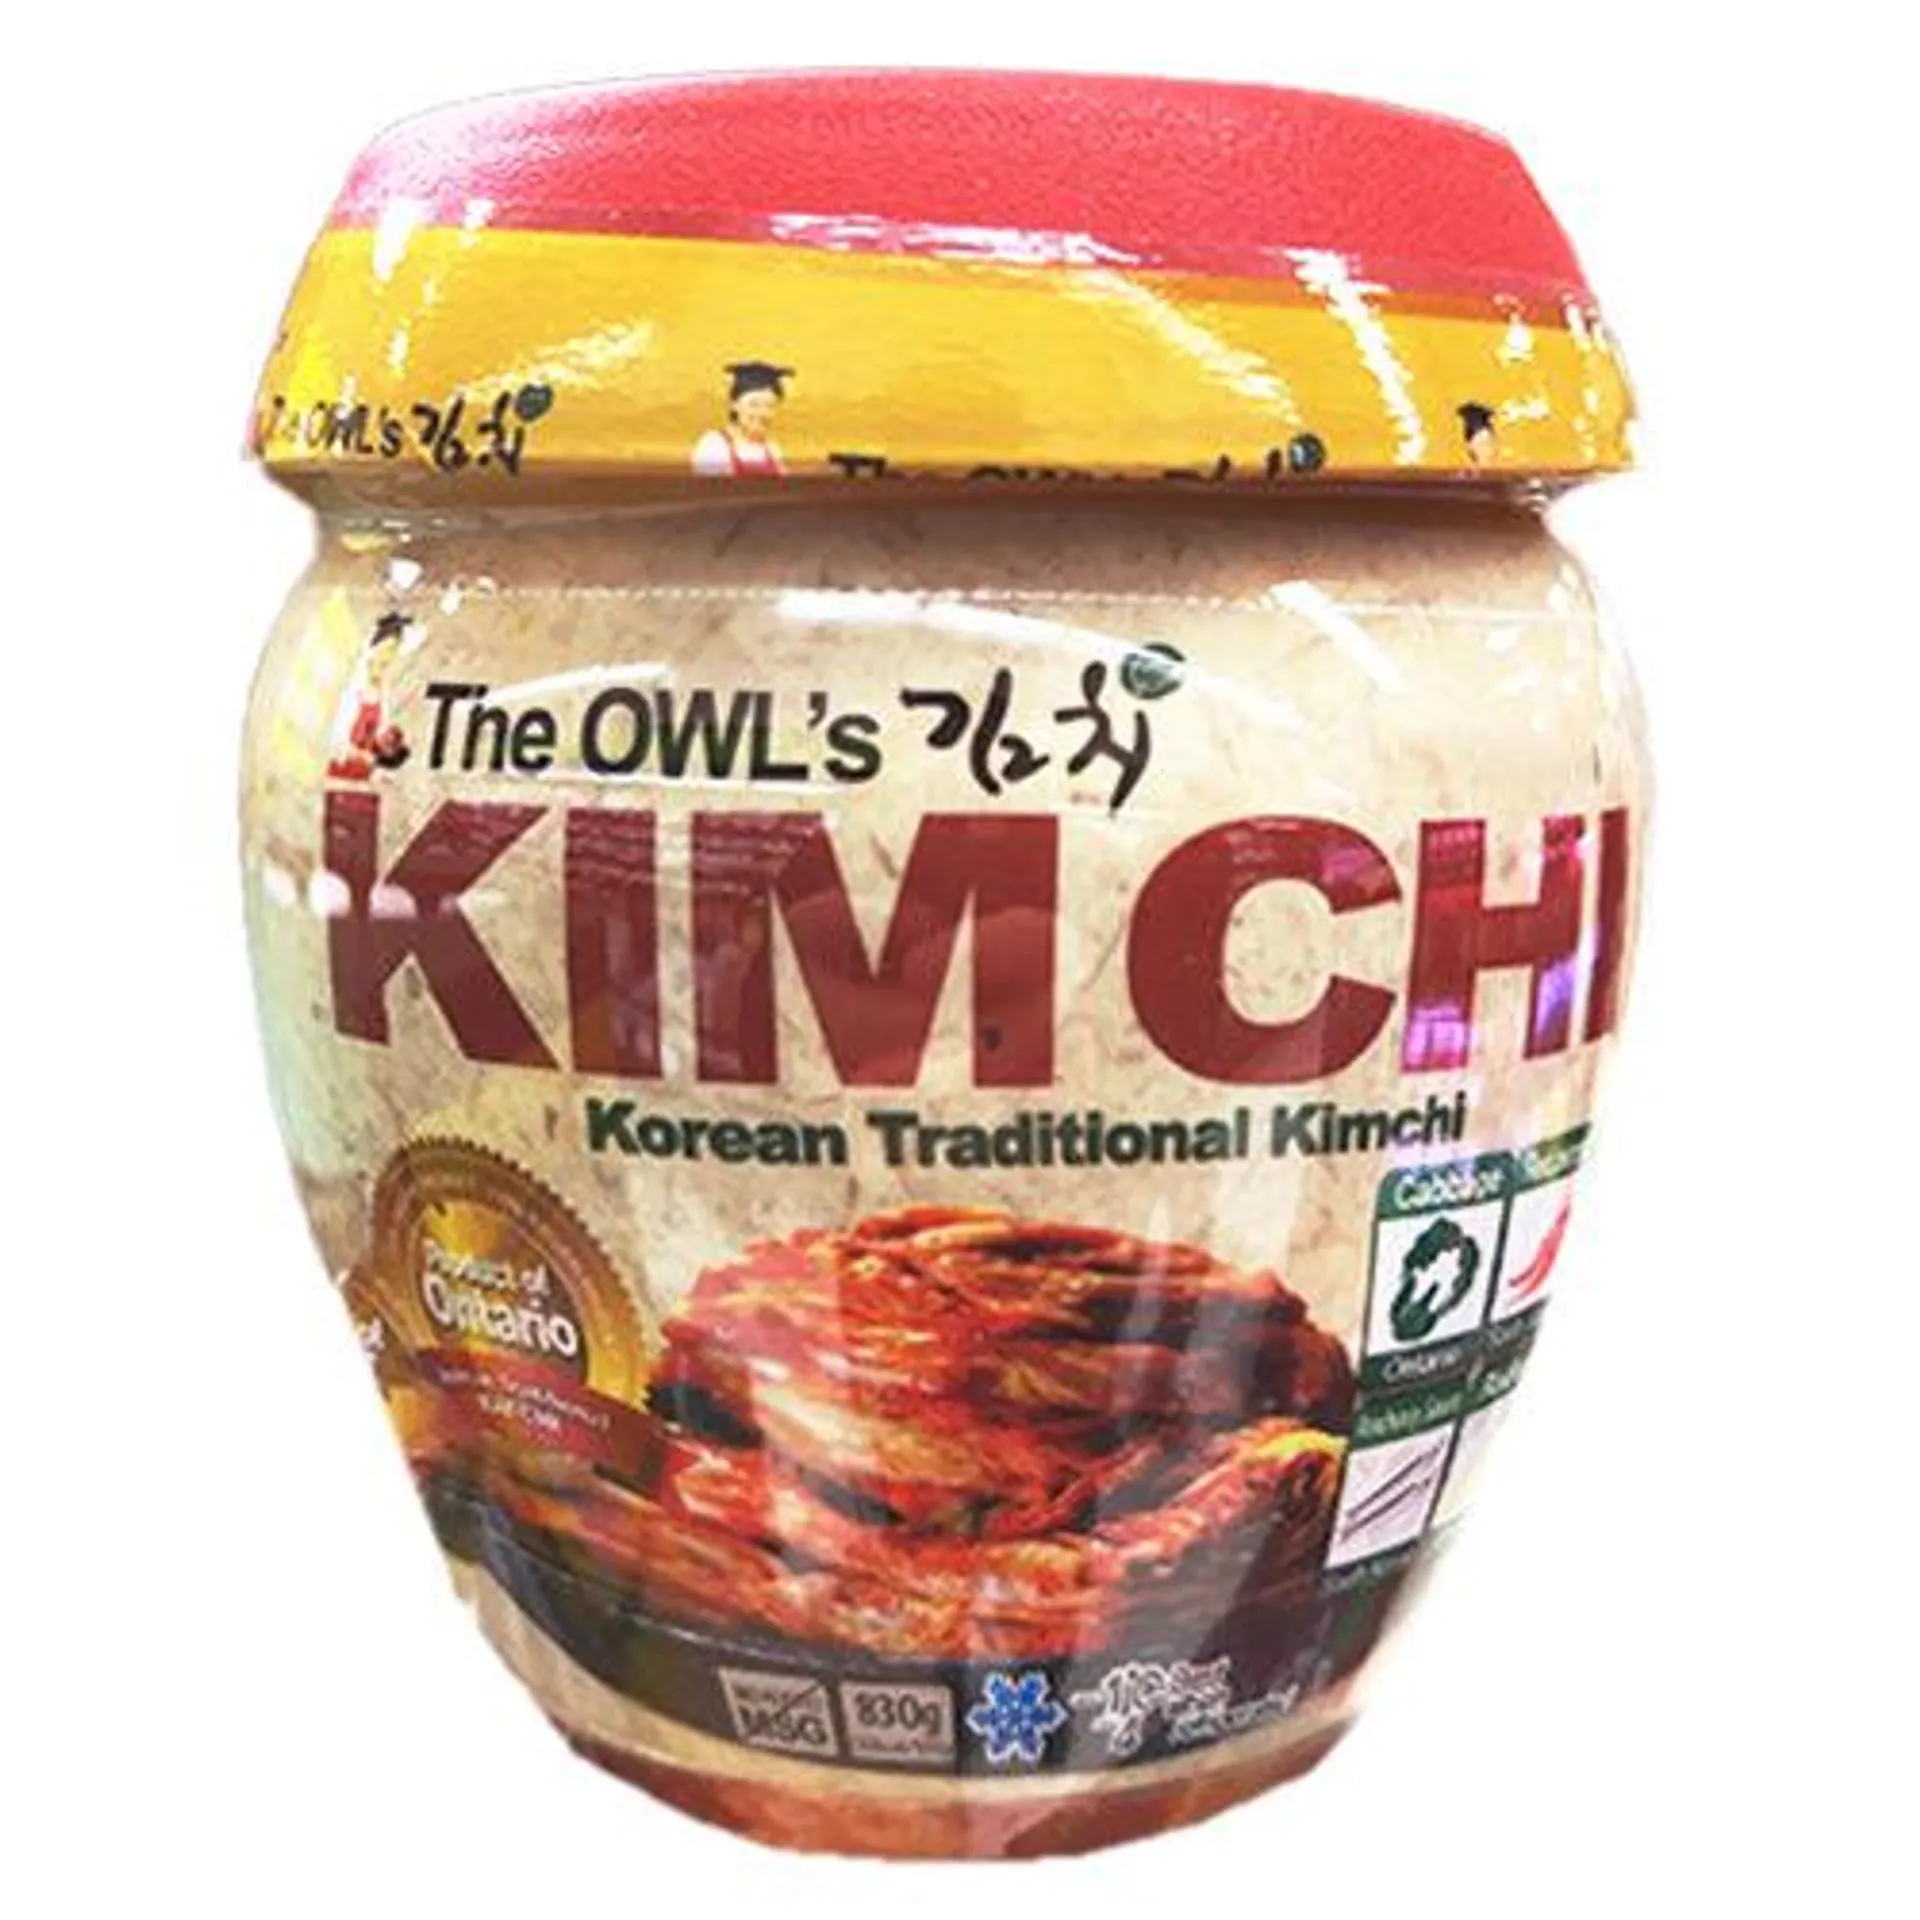 The Owl's Korean Traditional Kimchi 830g